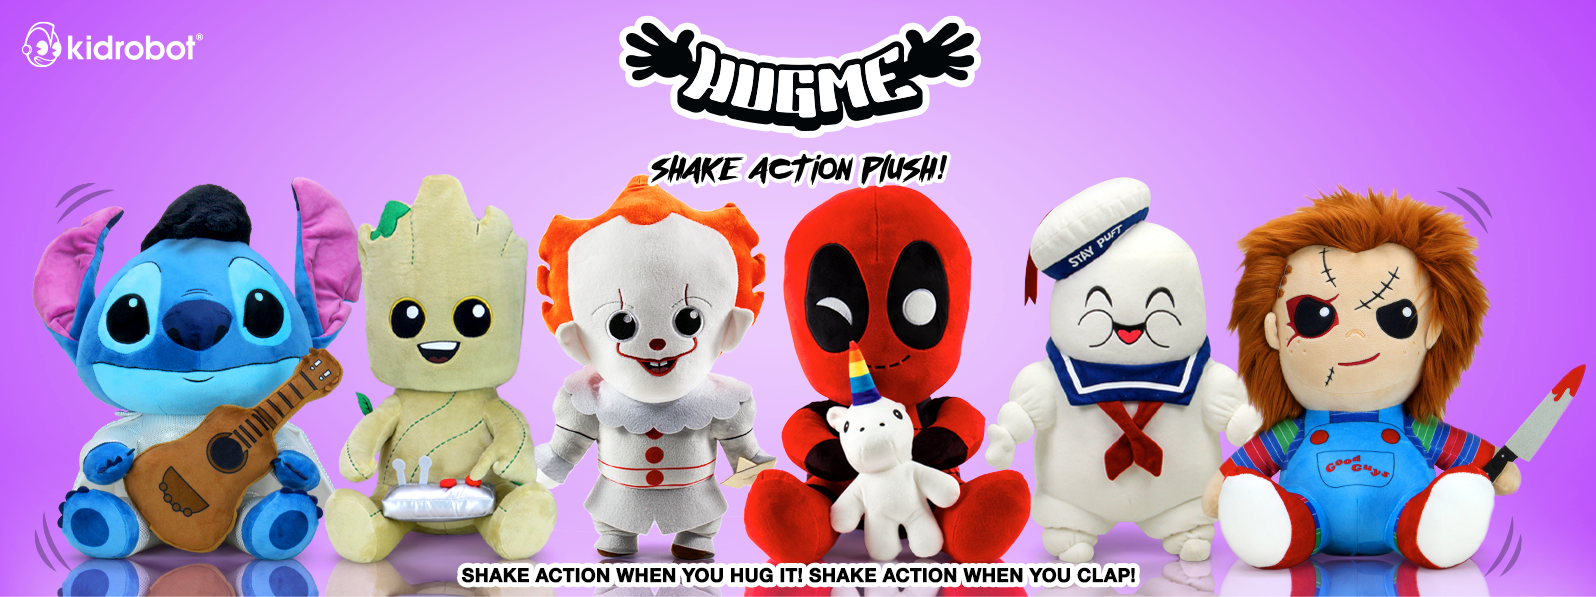 Kidrobot HugMe Plush Toys - Shake action when you hug it. Shake action when you clap.